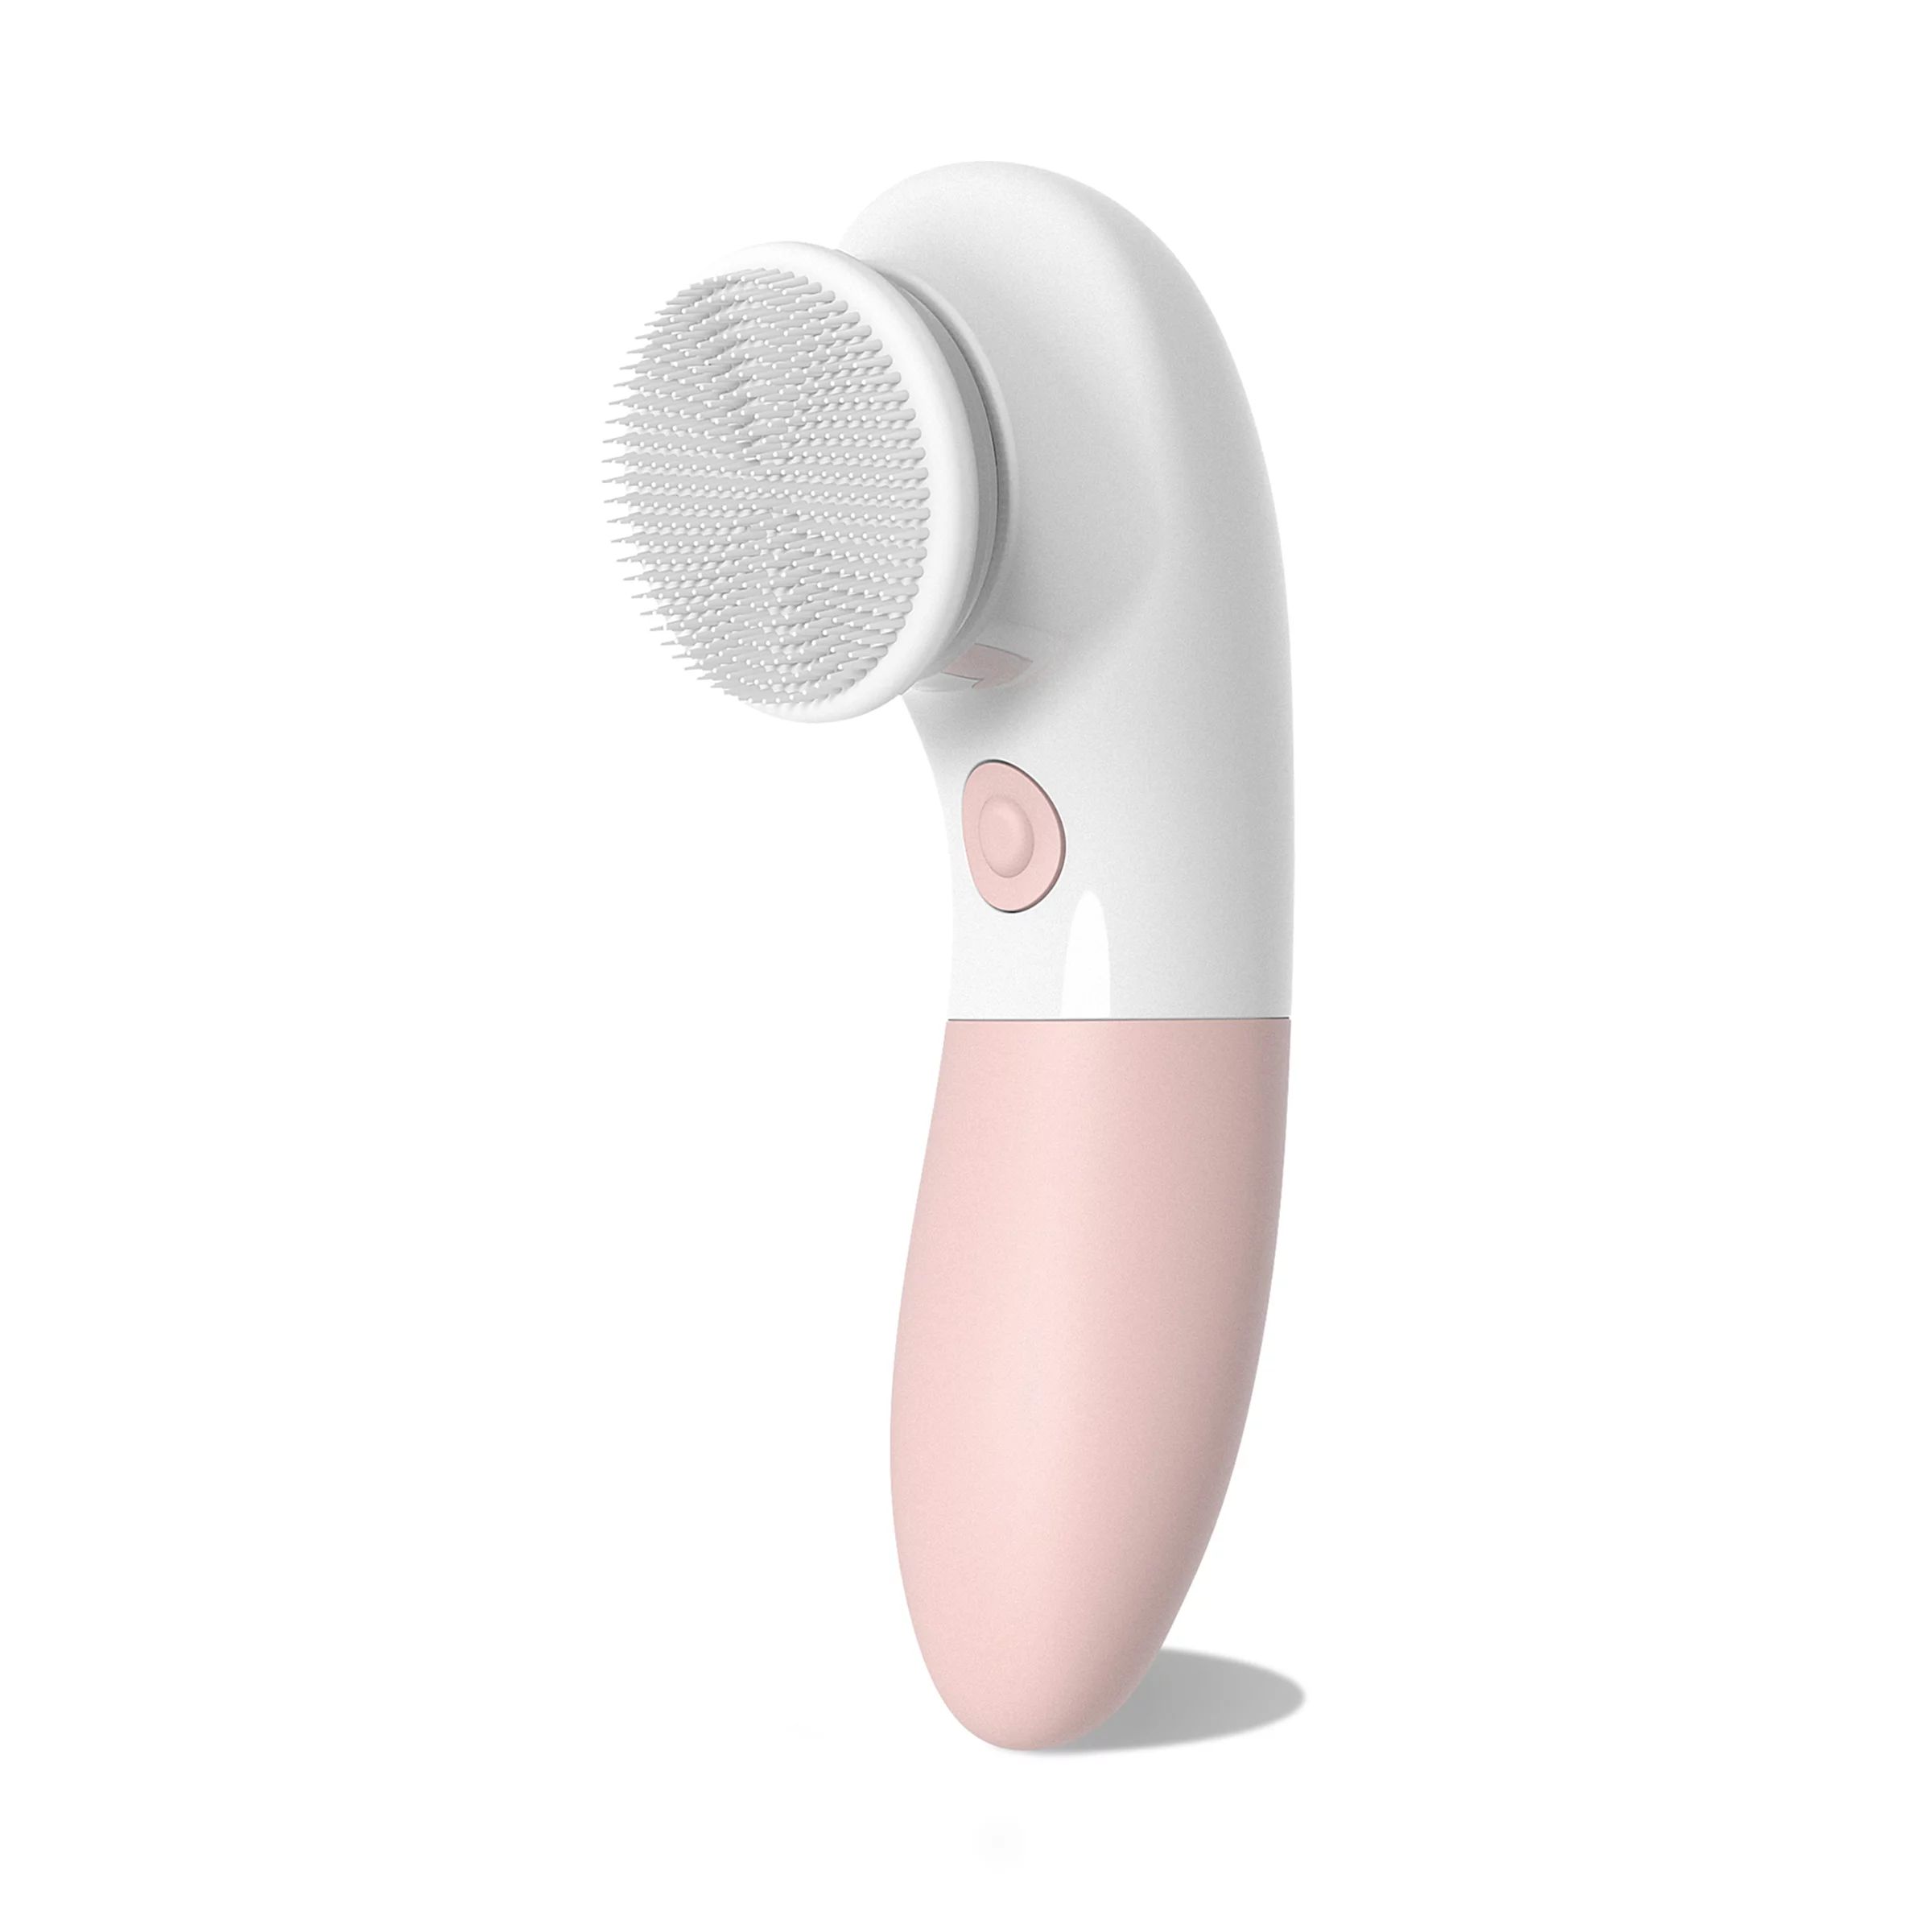 Vanity Planet Raedia Handheld Facial Cleansing Brush with 3 Interchangeable Brush Heads, Pink | Walmart (US)